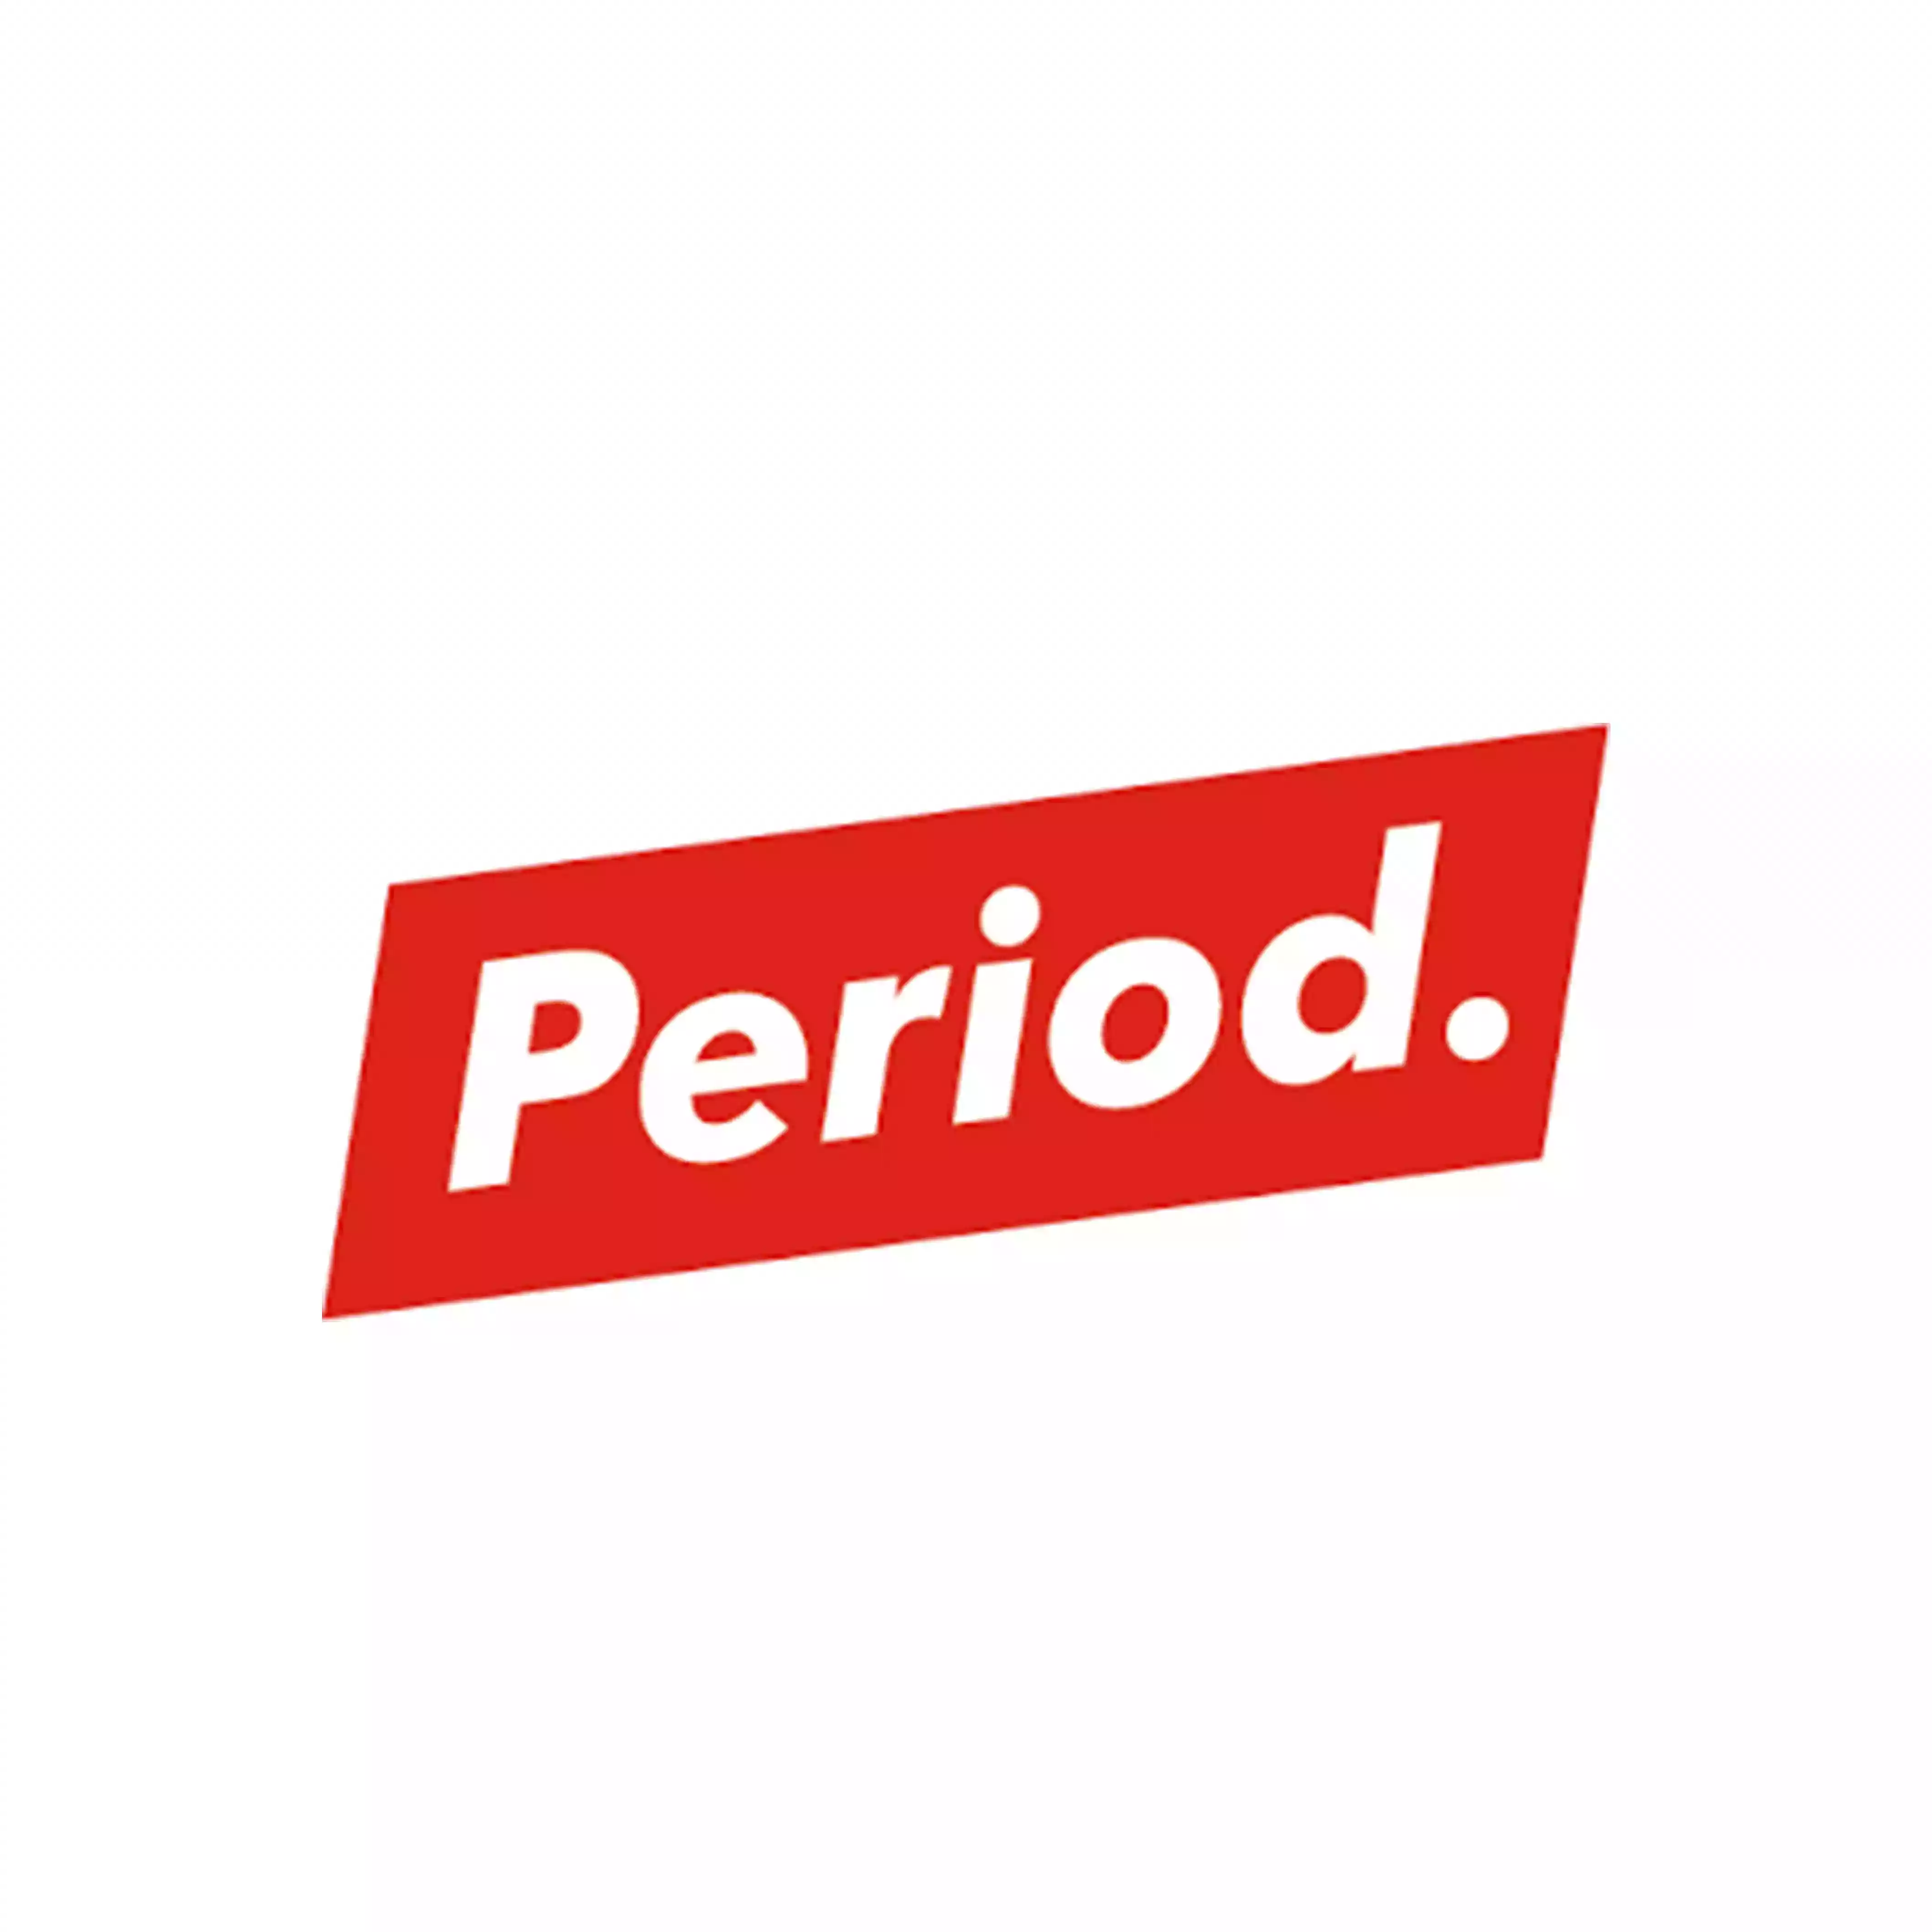 Period logo